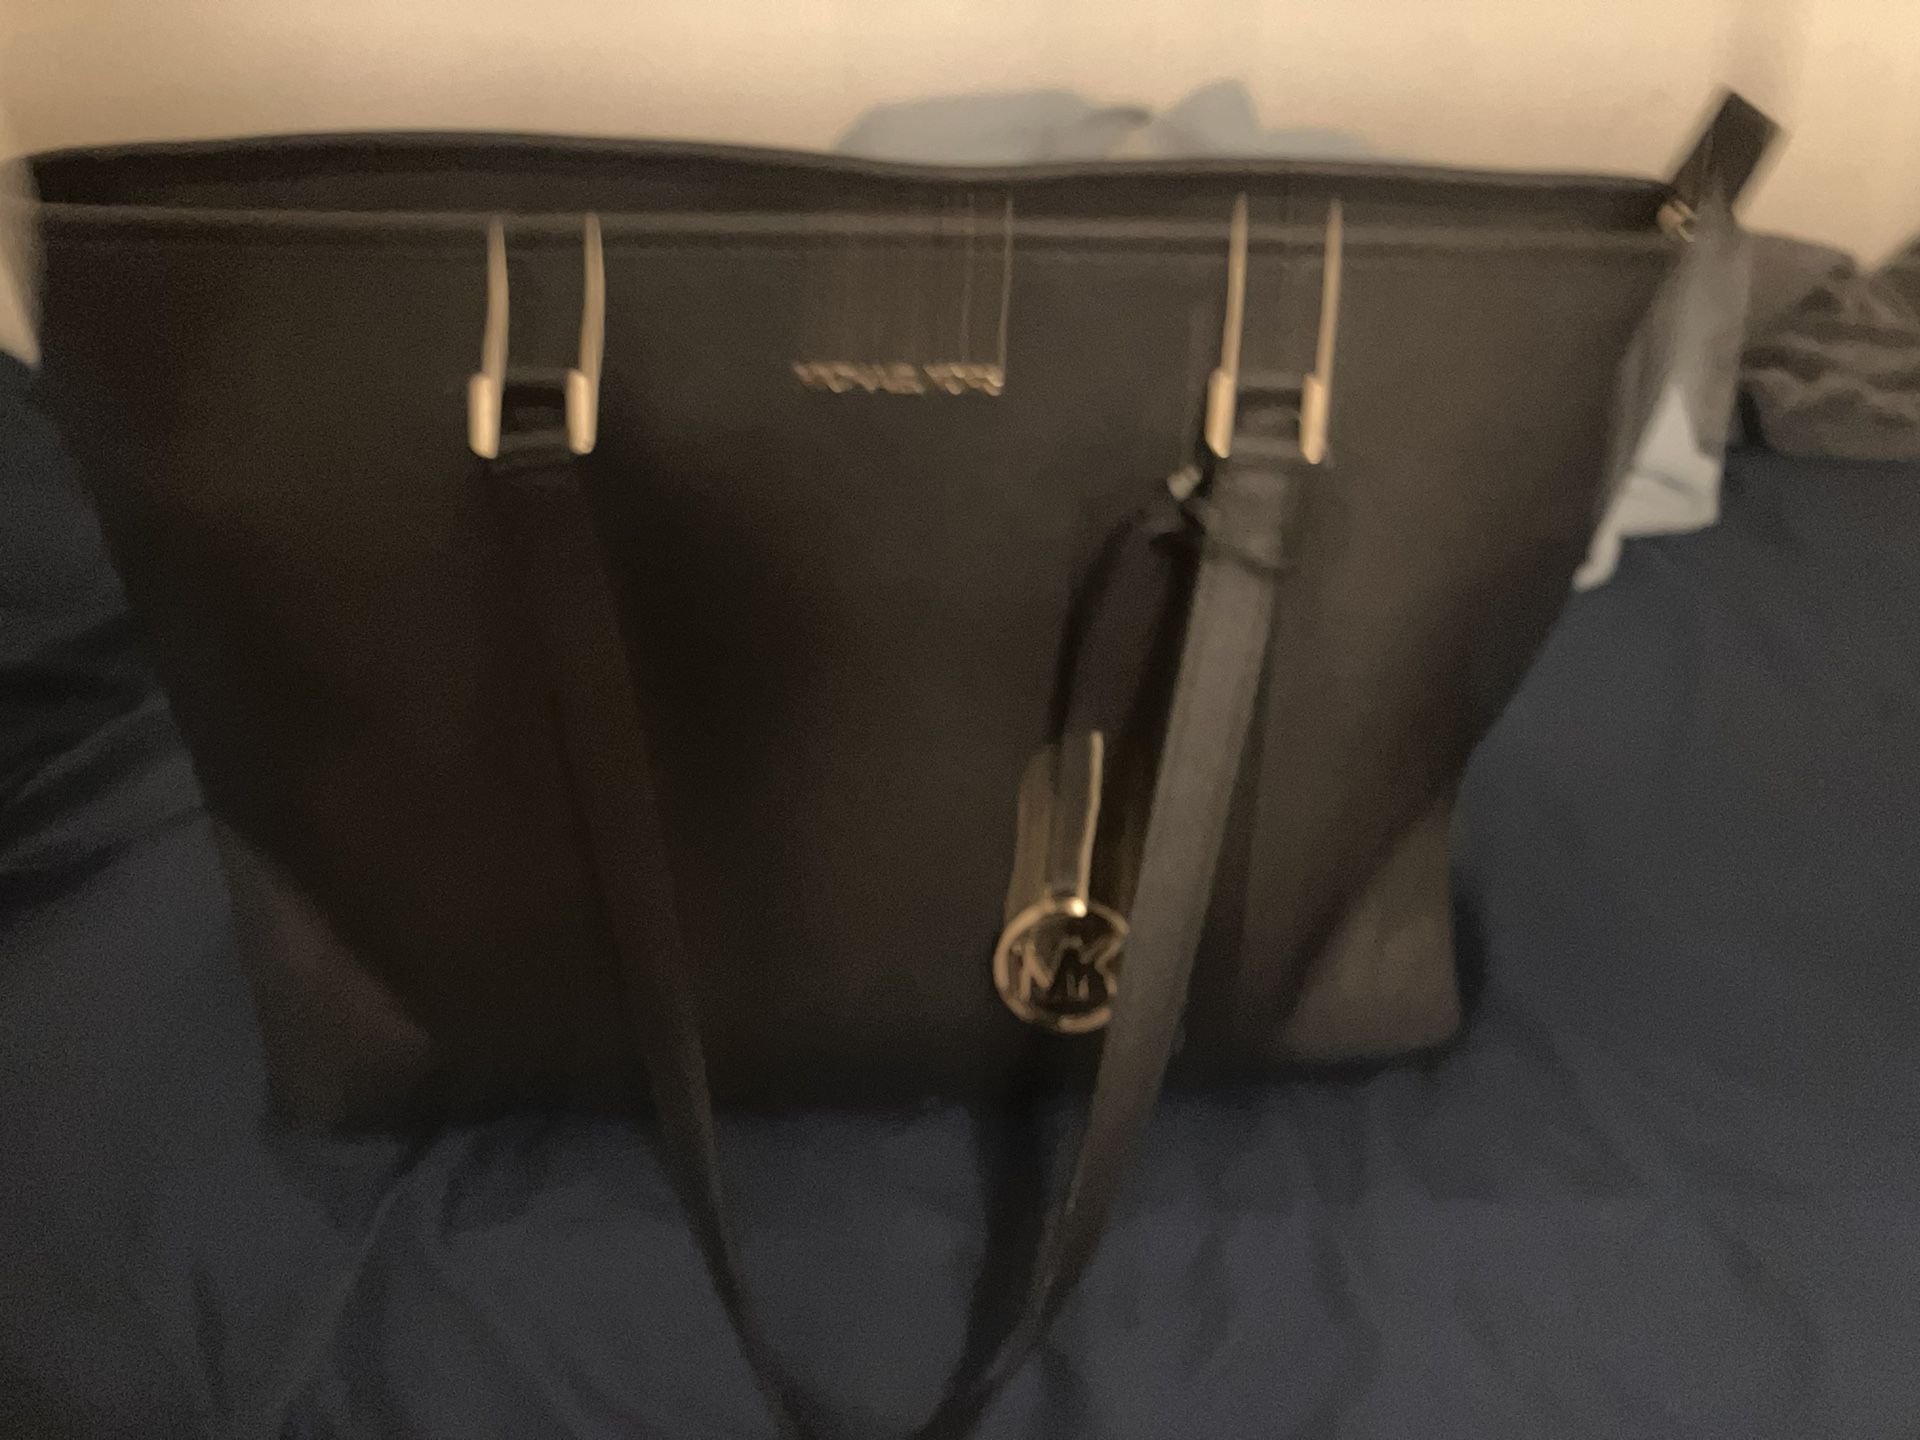 Michael Kors Handbag 